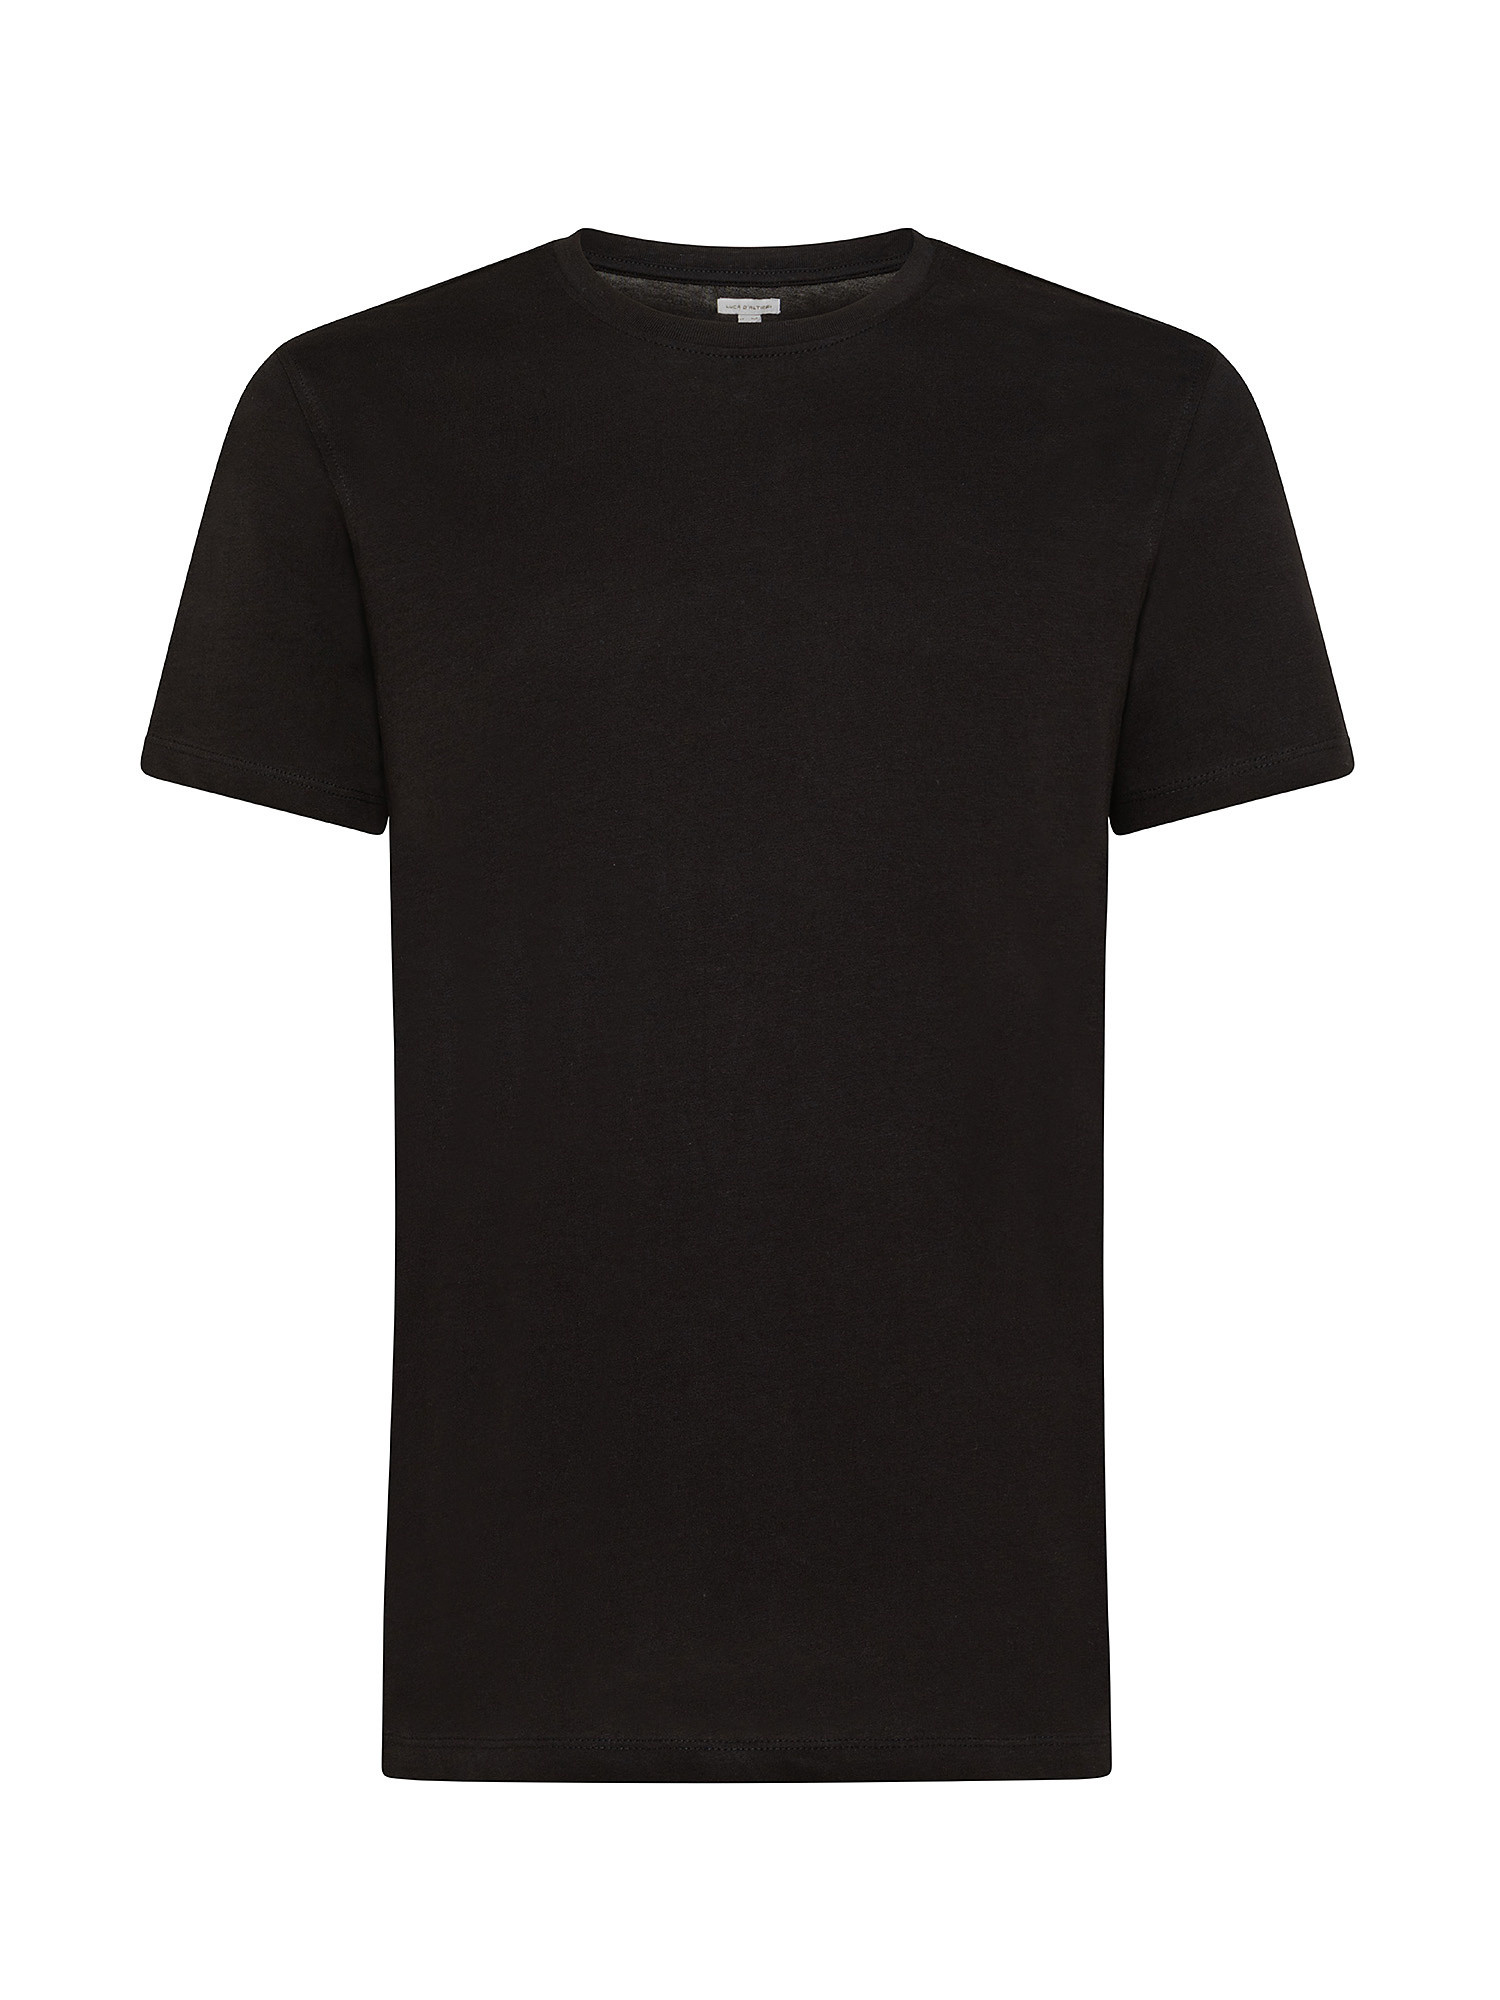 Luca D'Altieri - Crew neck supima cotton T-shirt, Black, large image number 0